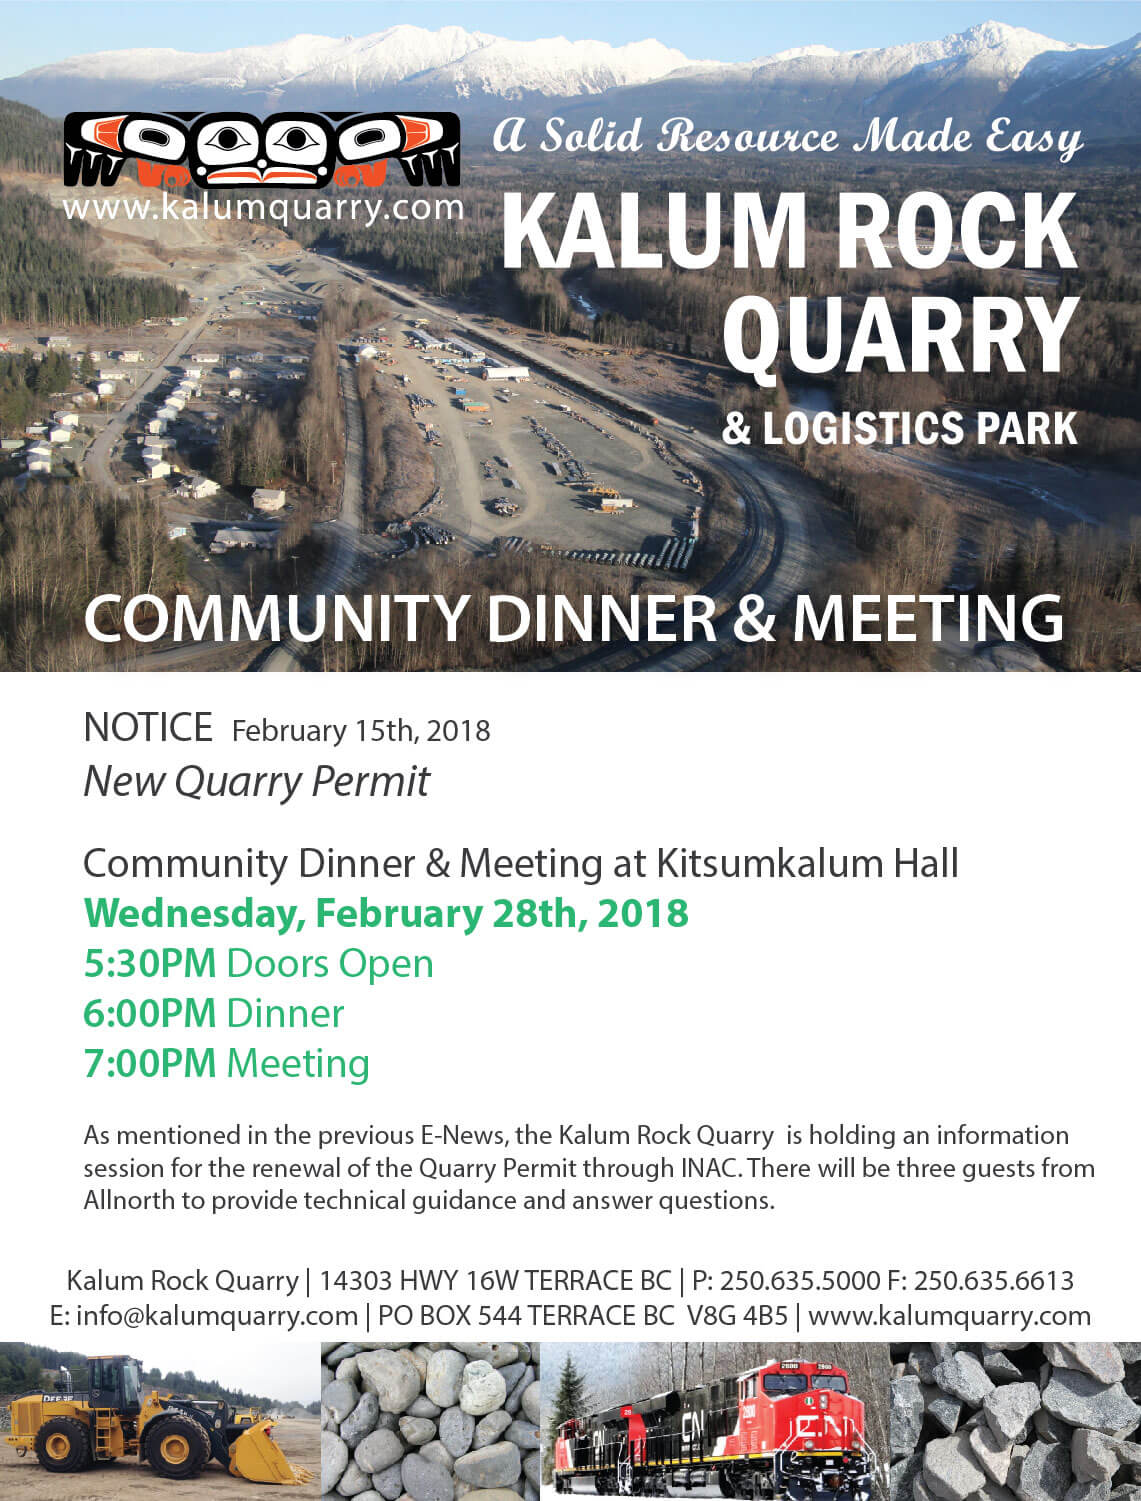 Renewal of Quarry Permit – Information Session Feb. 28th